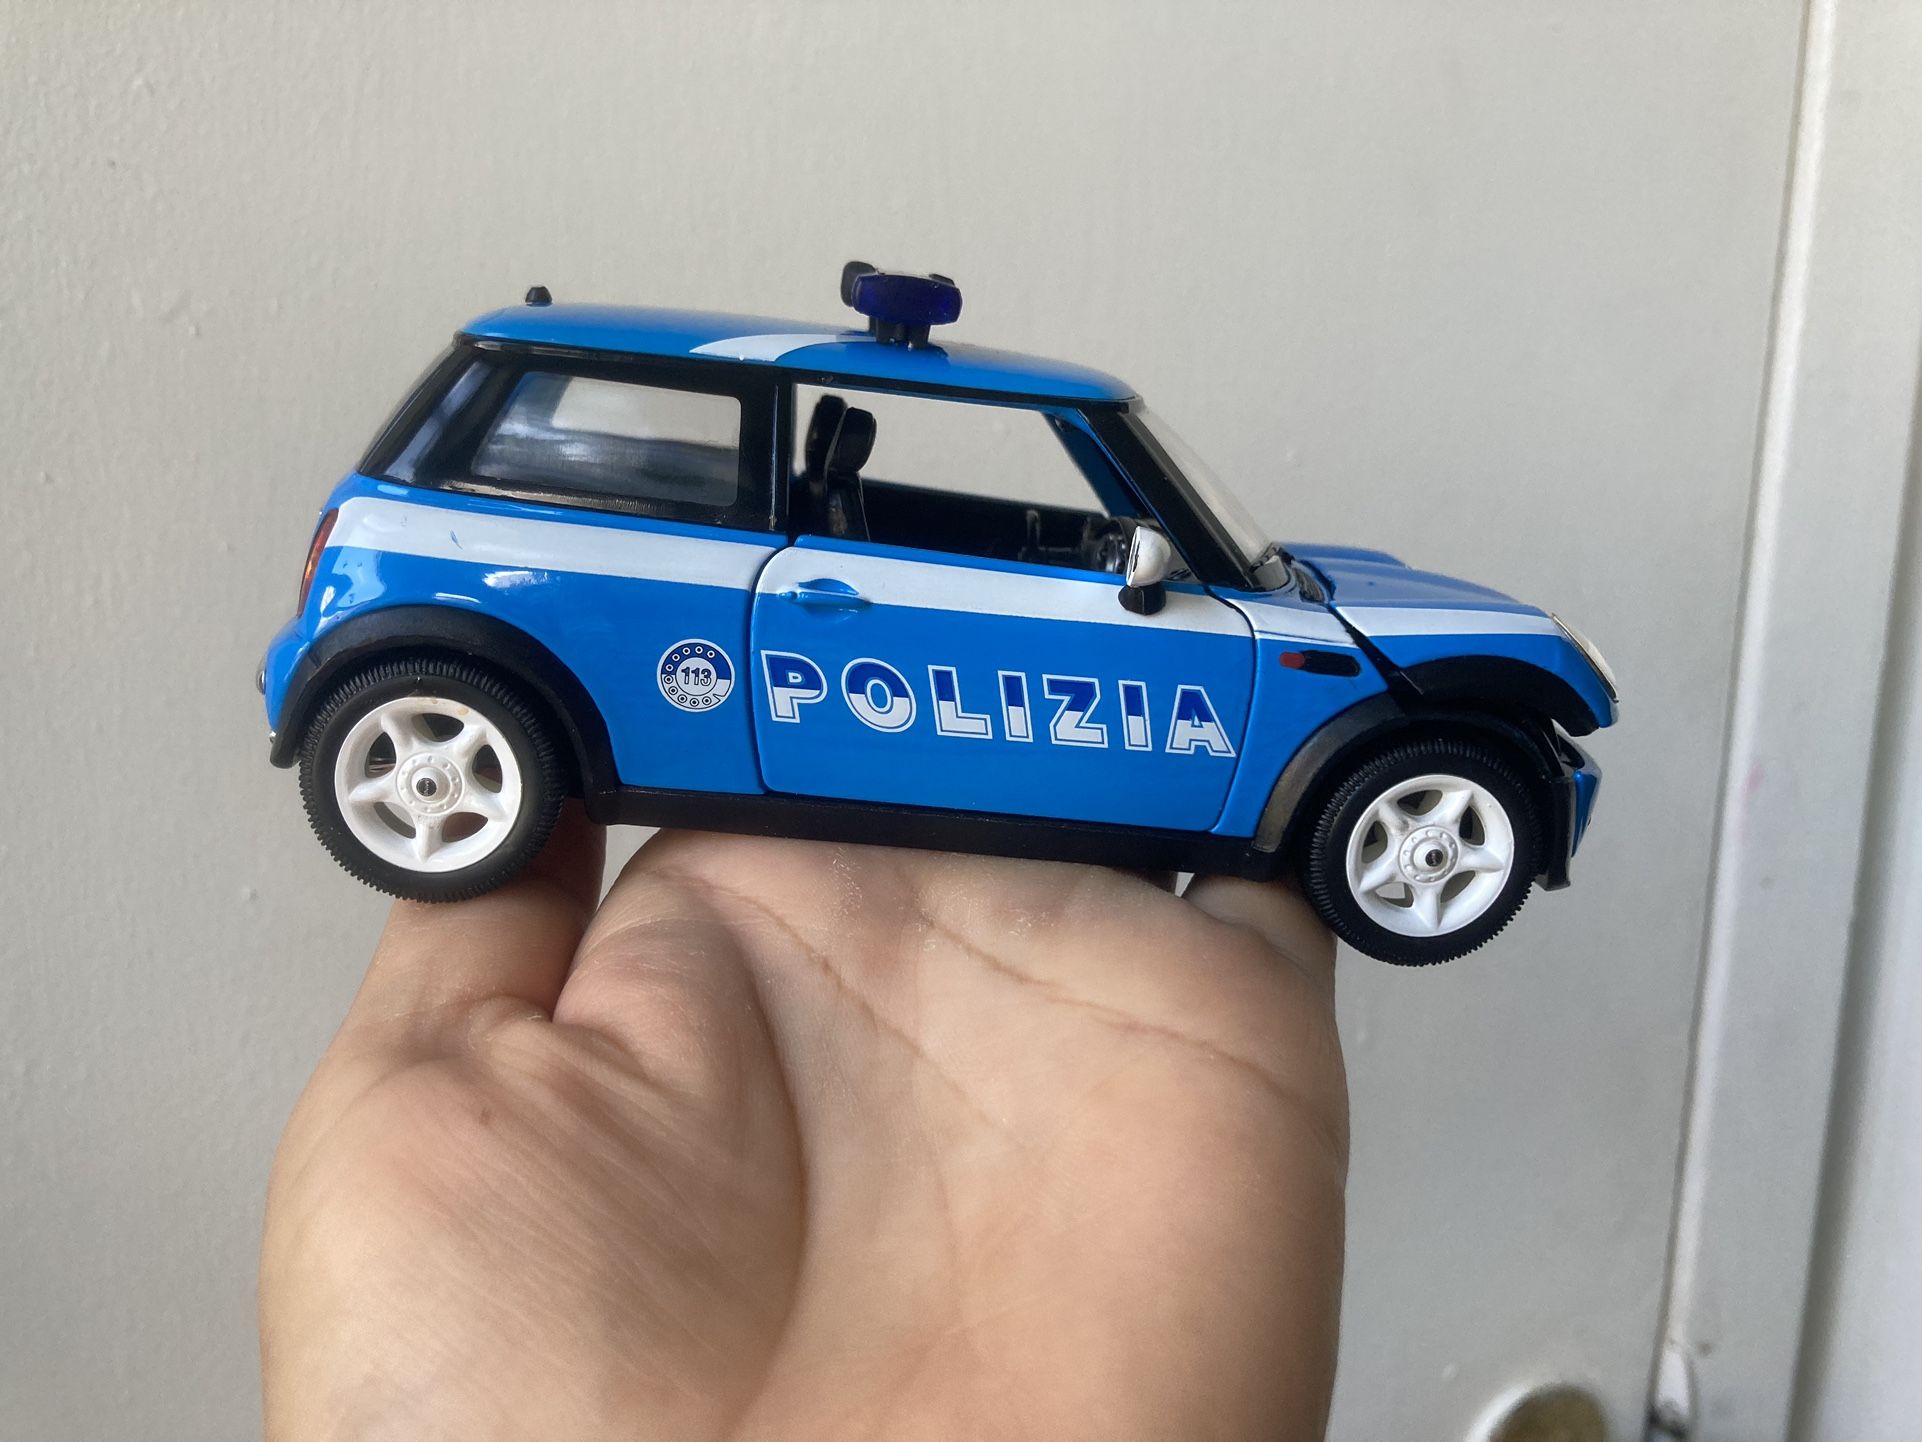 New Polizia Car 